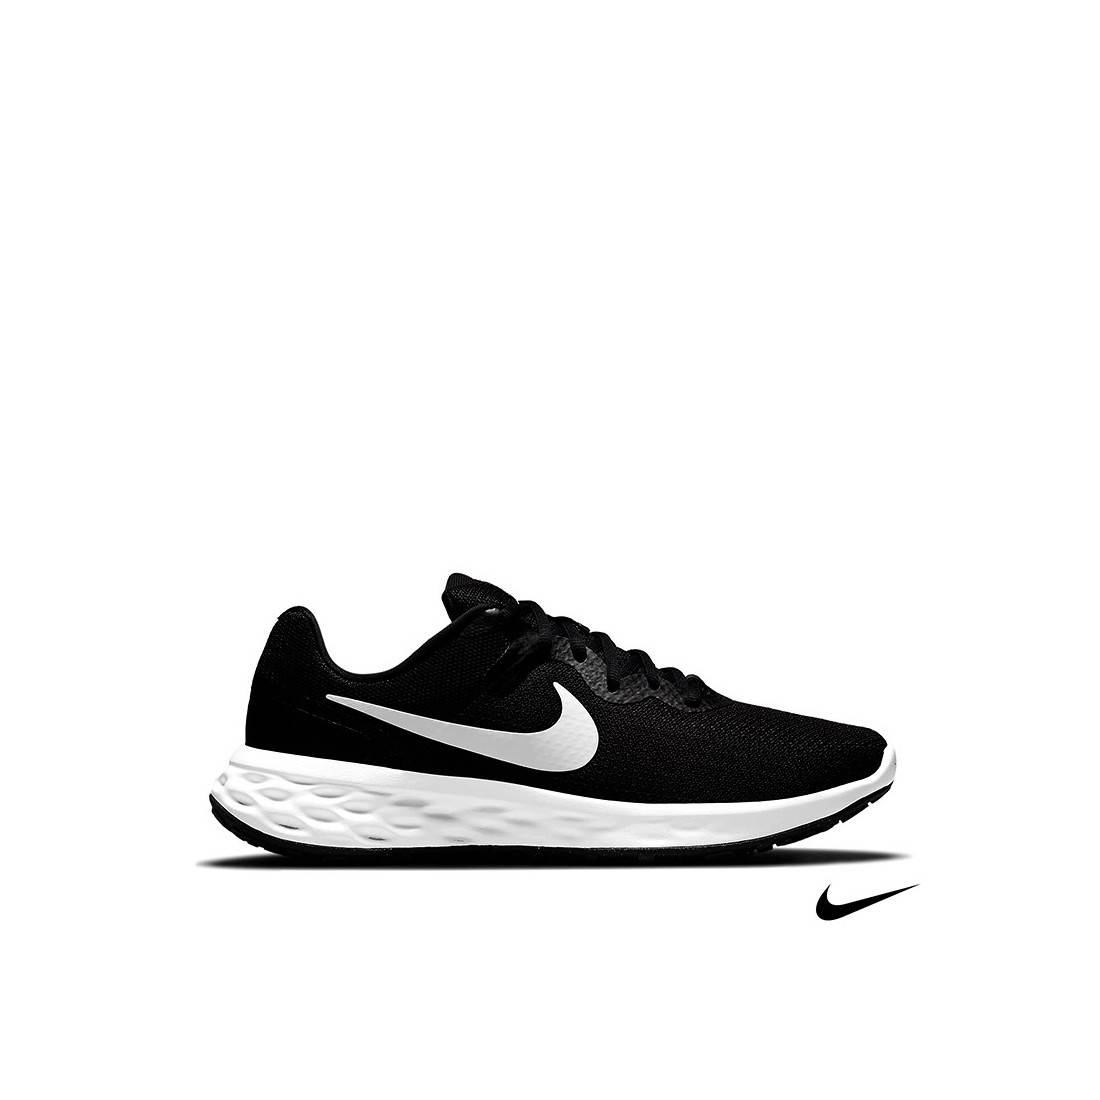 Nike Revolution NN color Negro y blanco